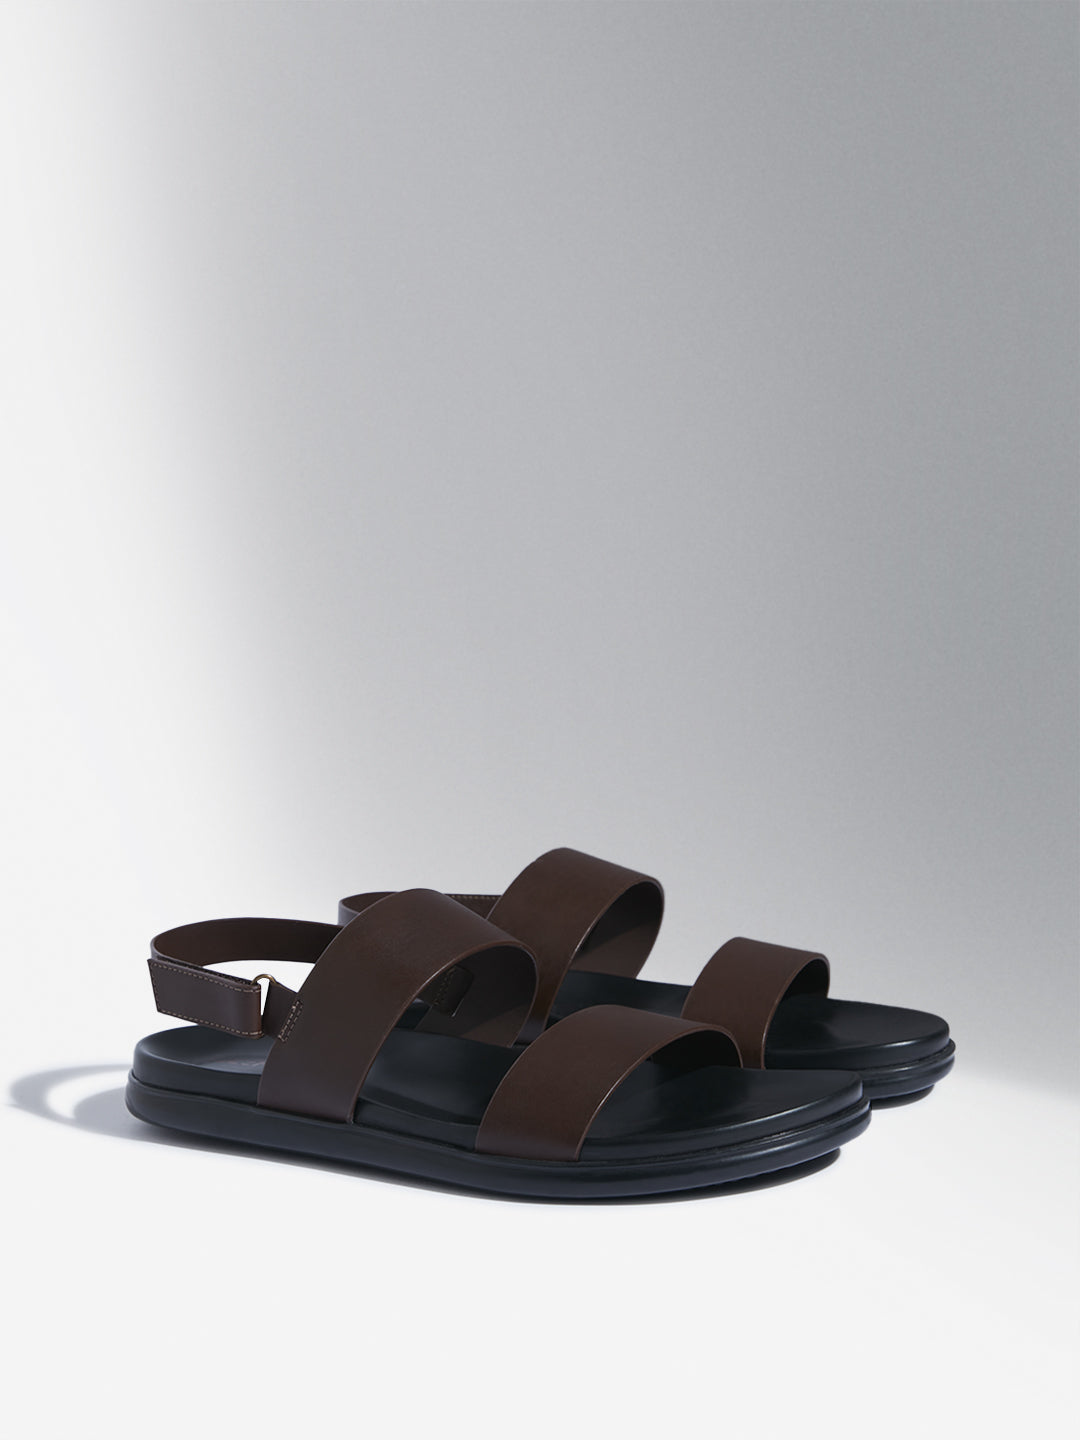 SOLEPLAY Dark Brown Multi-Strap Leather Sandals